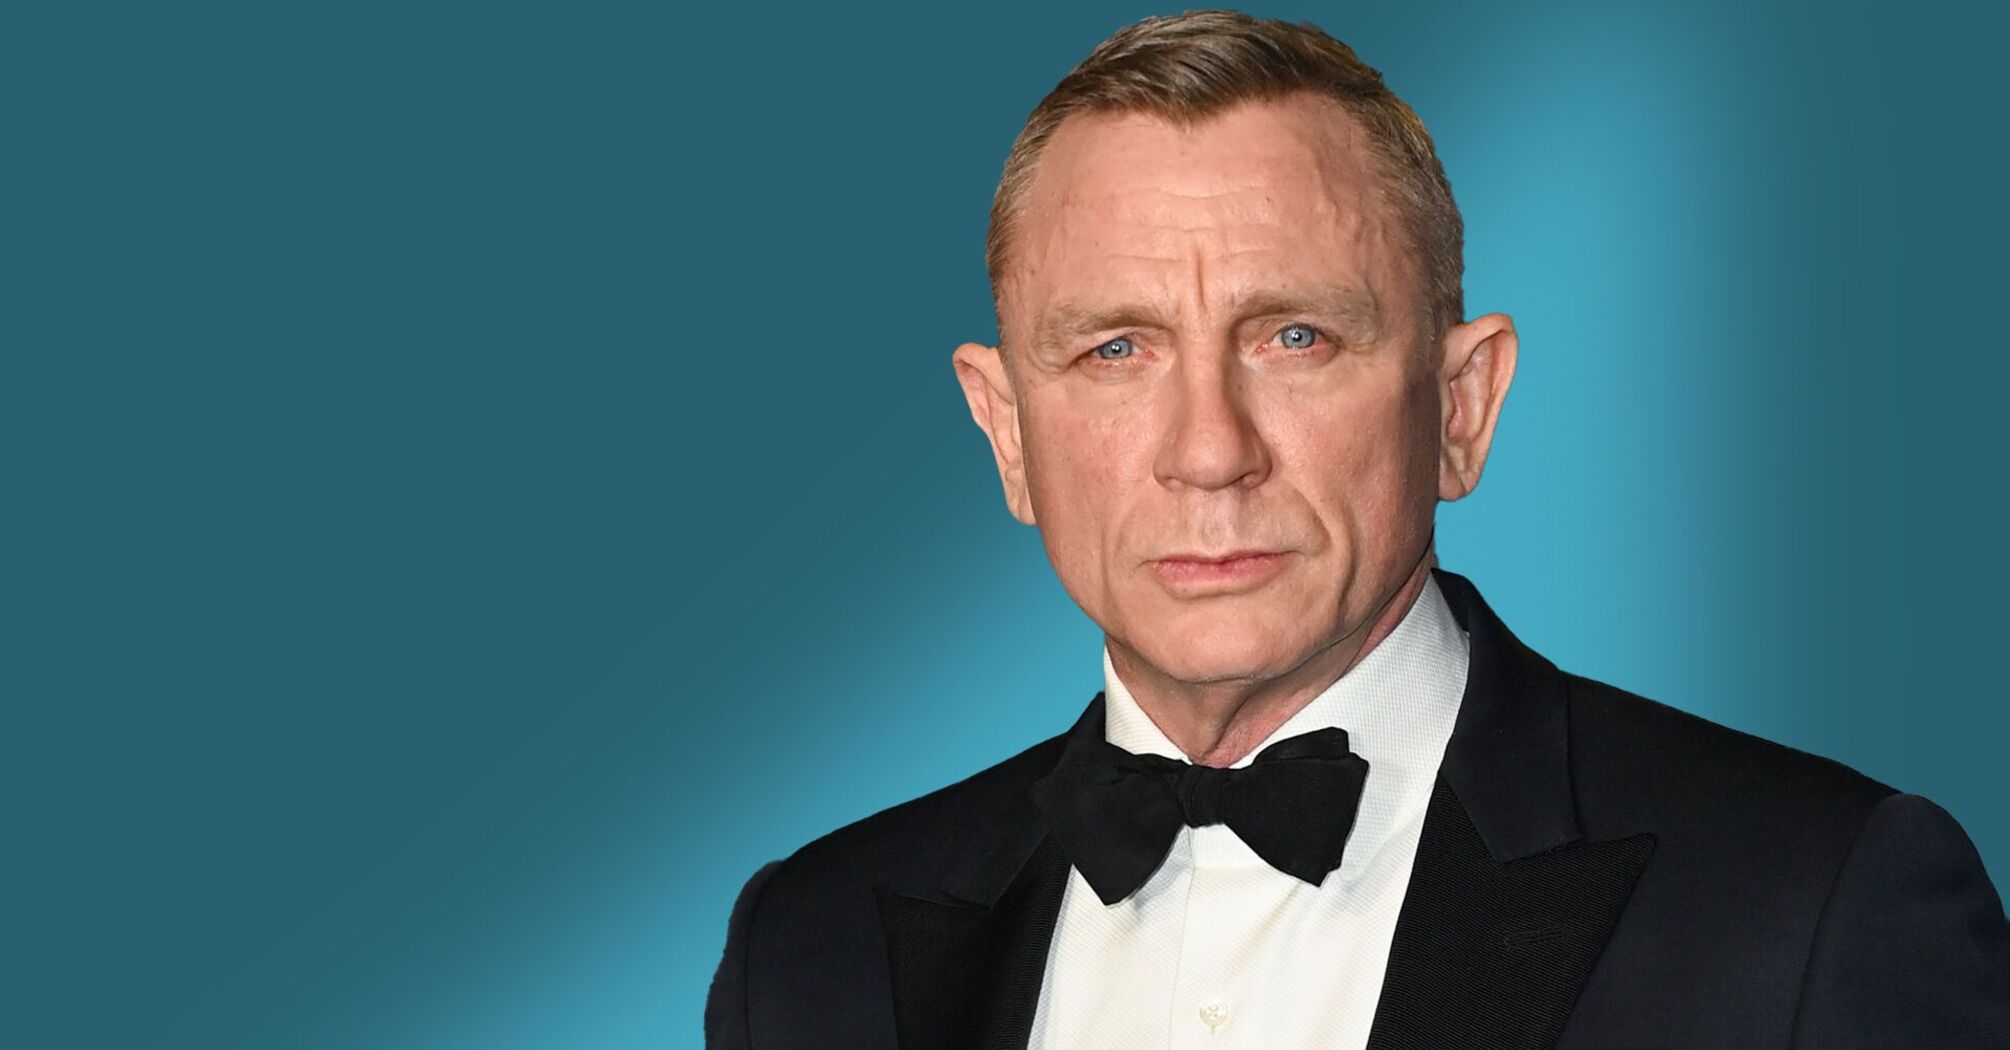 5 lesser-known facts about Daniel Craig